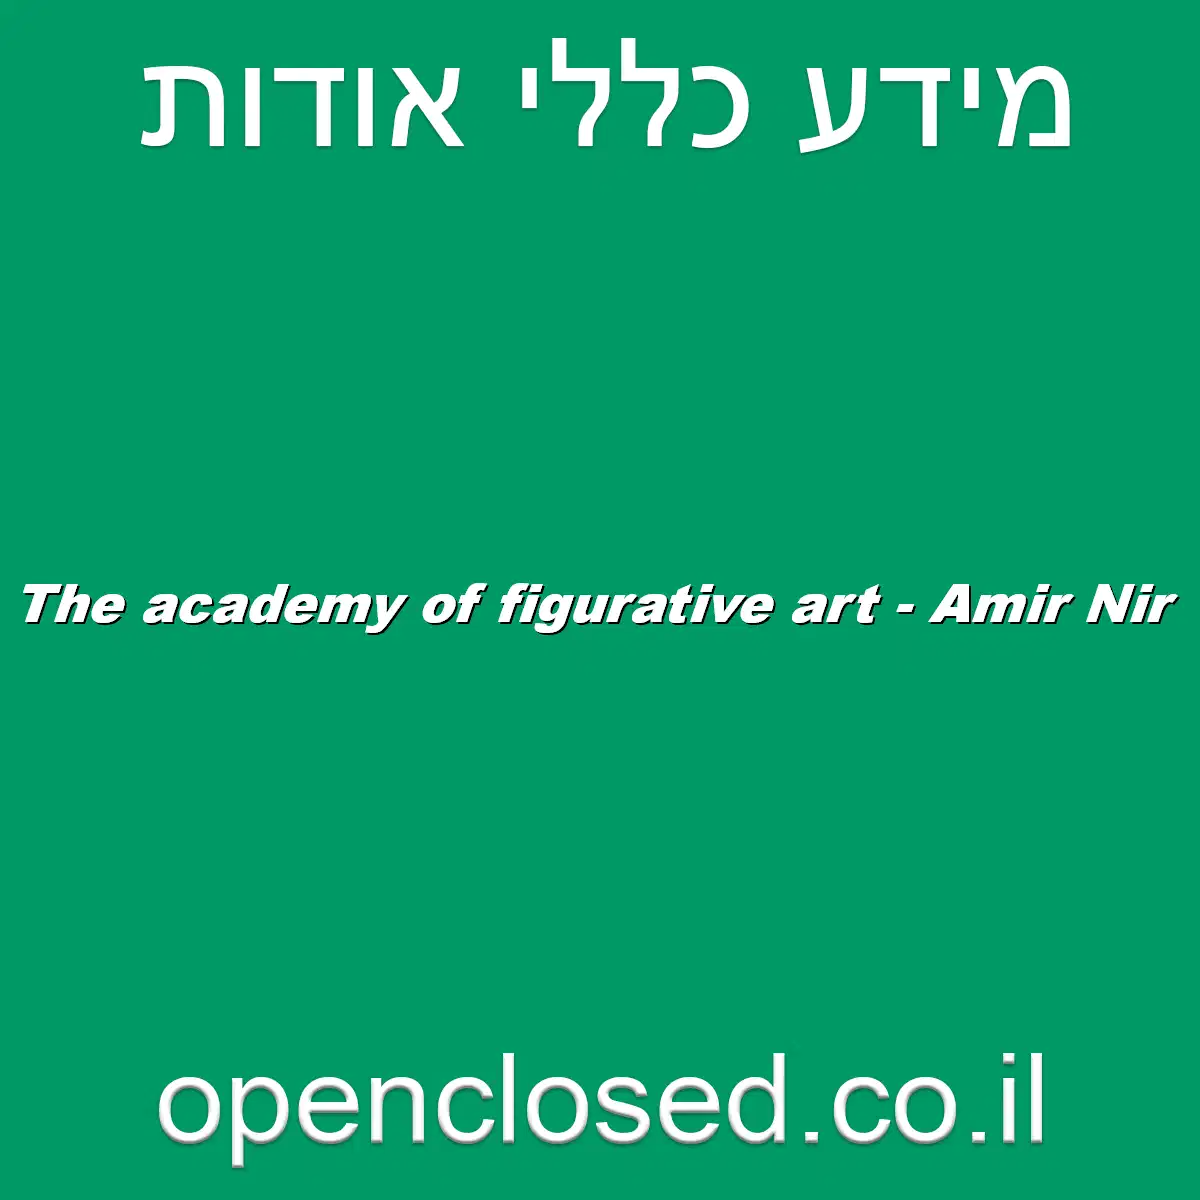 The academy of figurative art – Amir Nir